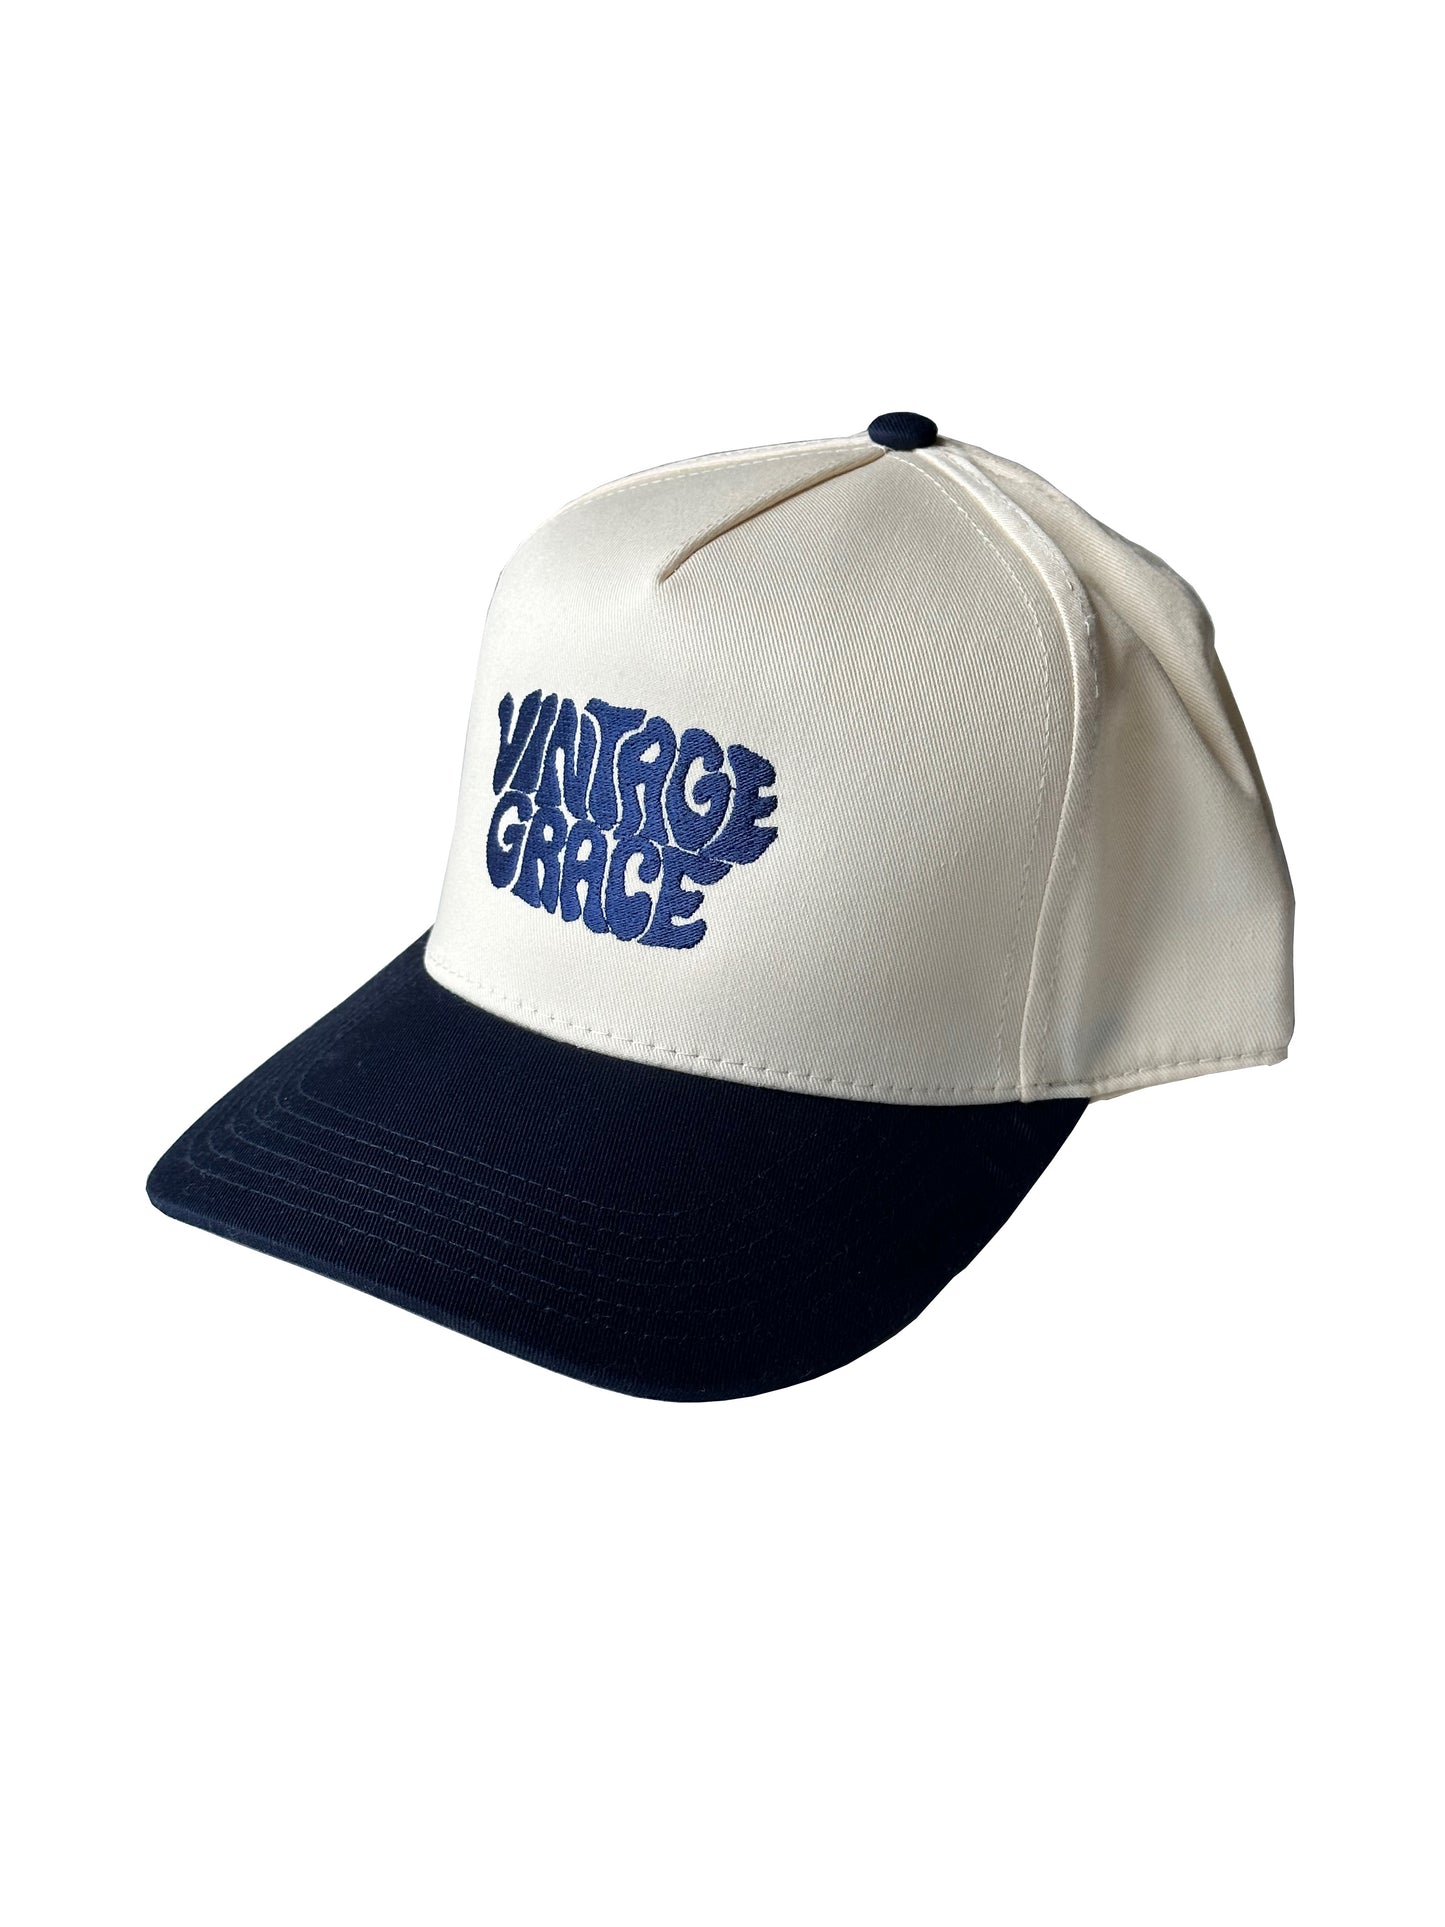 Vintage Grace Off White/Navy Hat